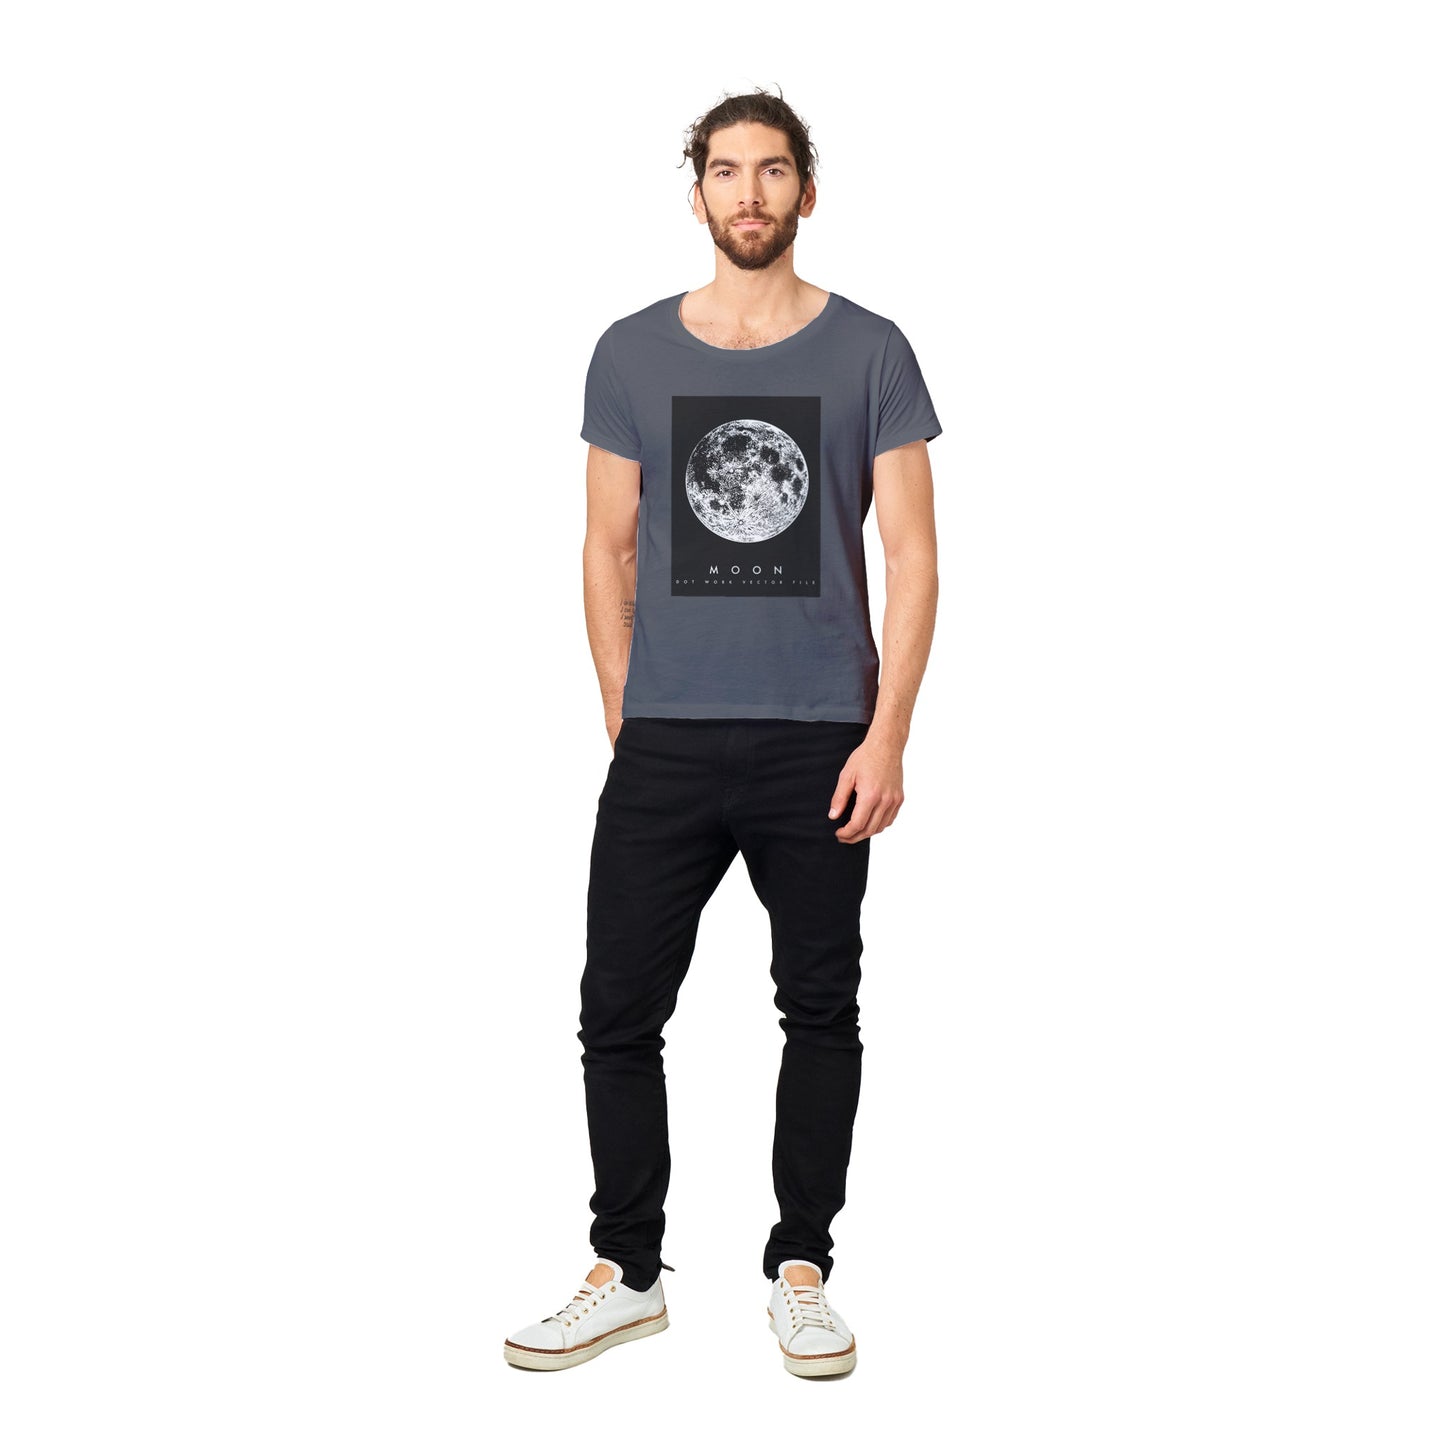 100% Organic Unisex T-shirt/The-Moon